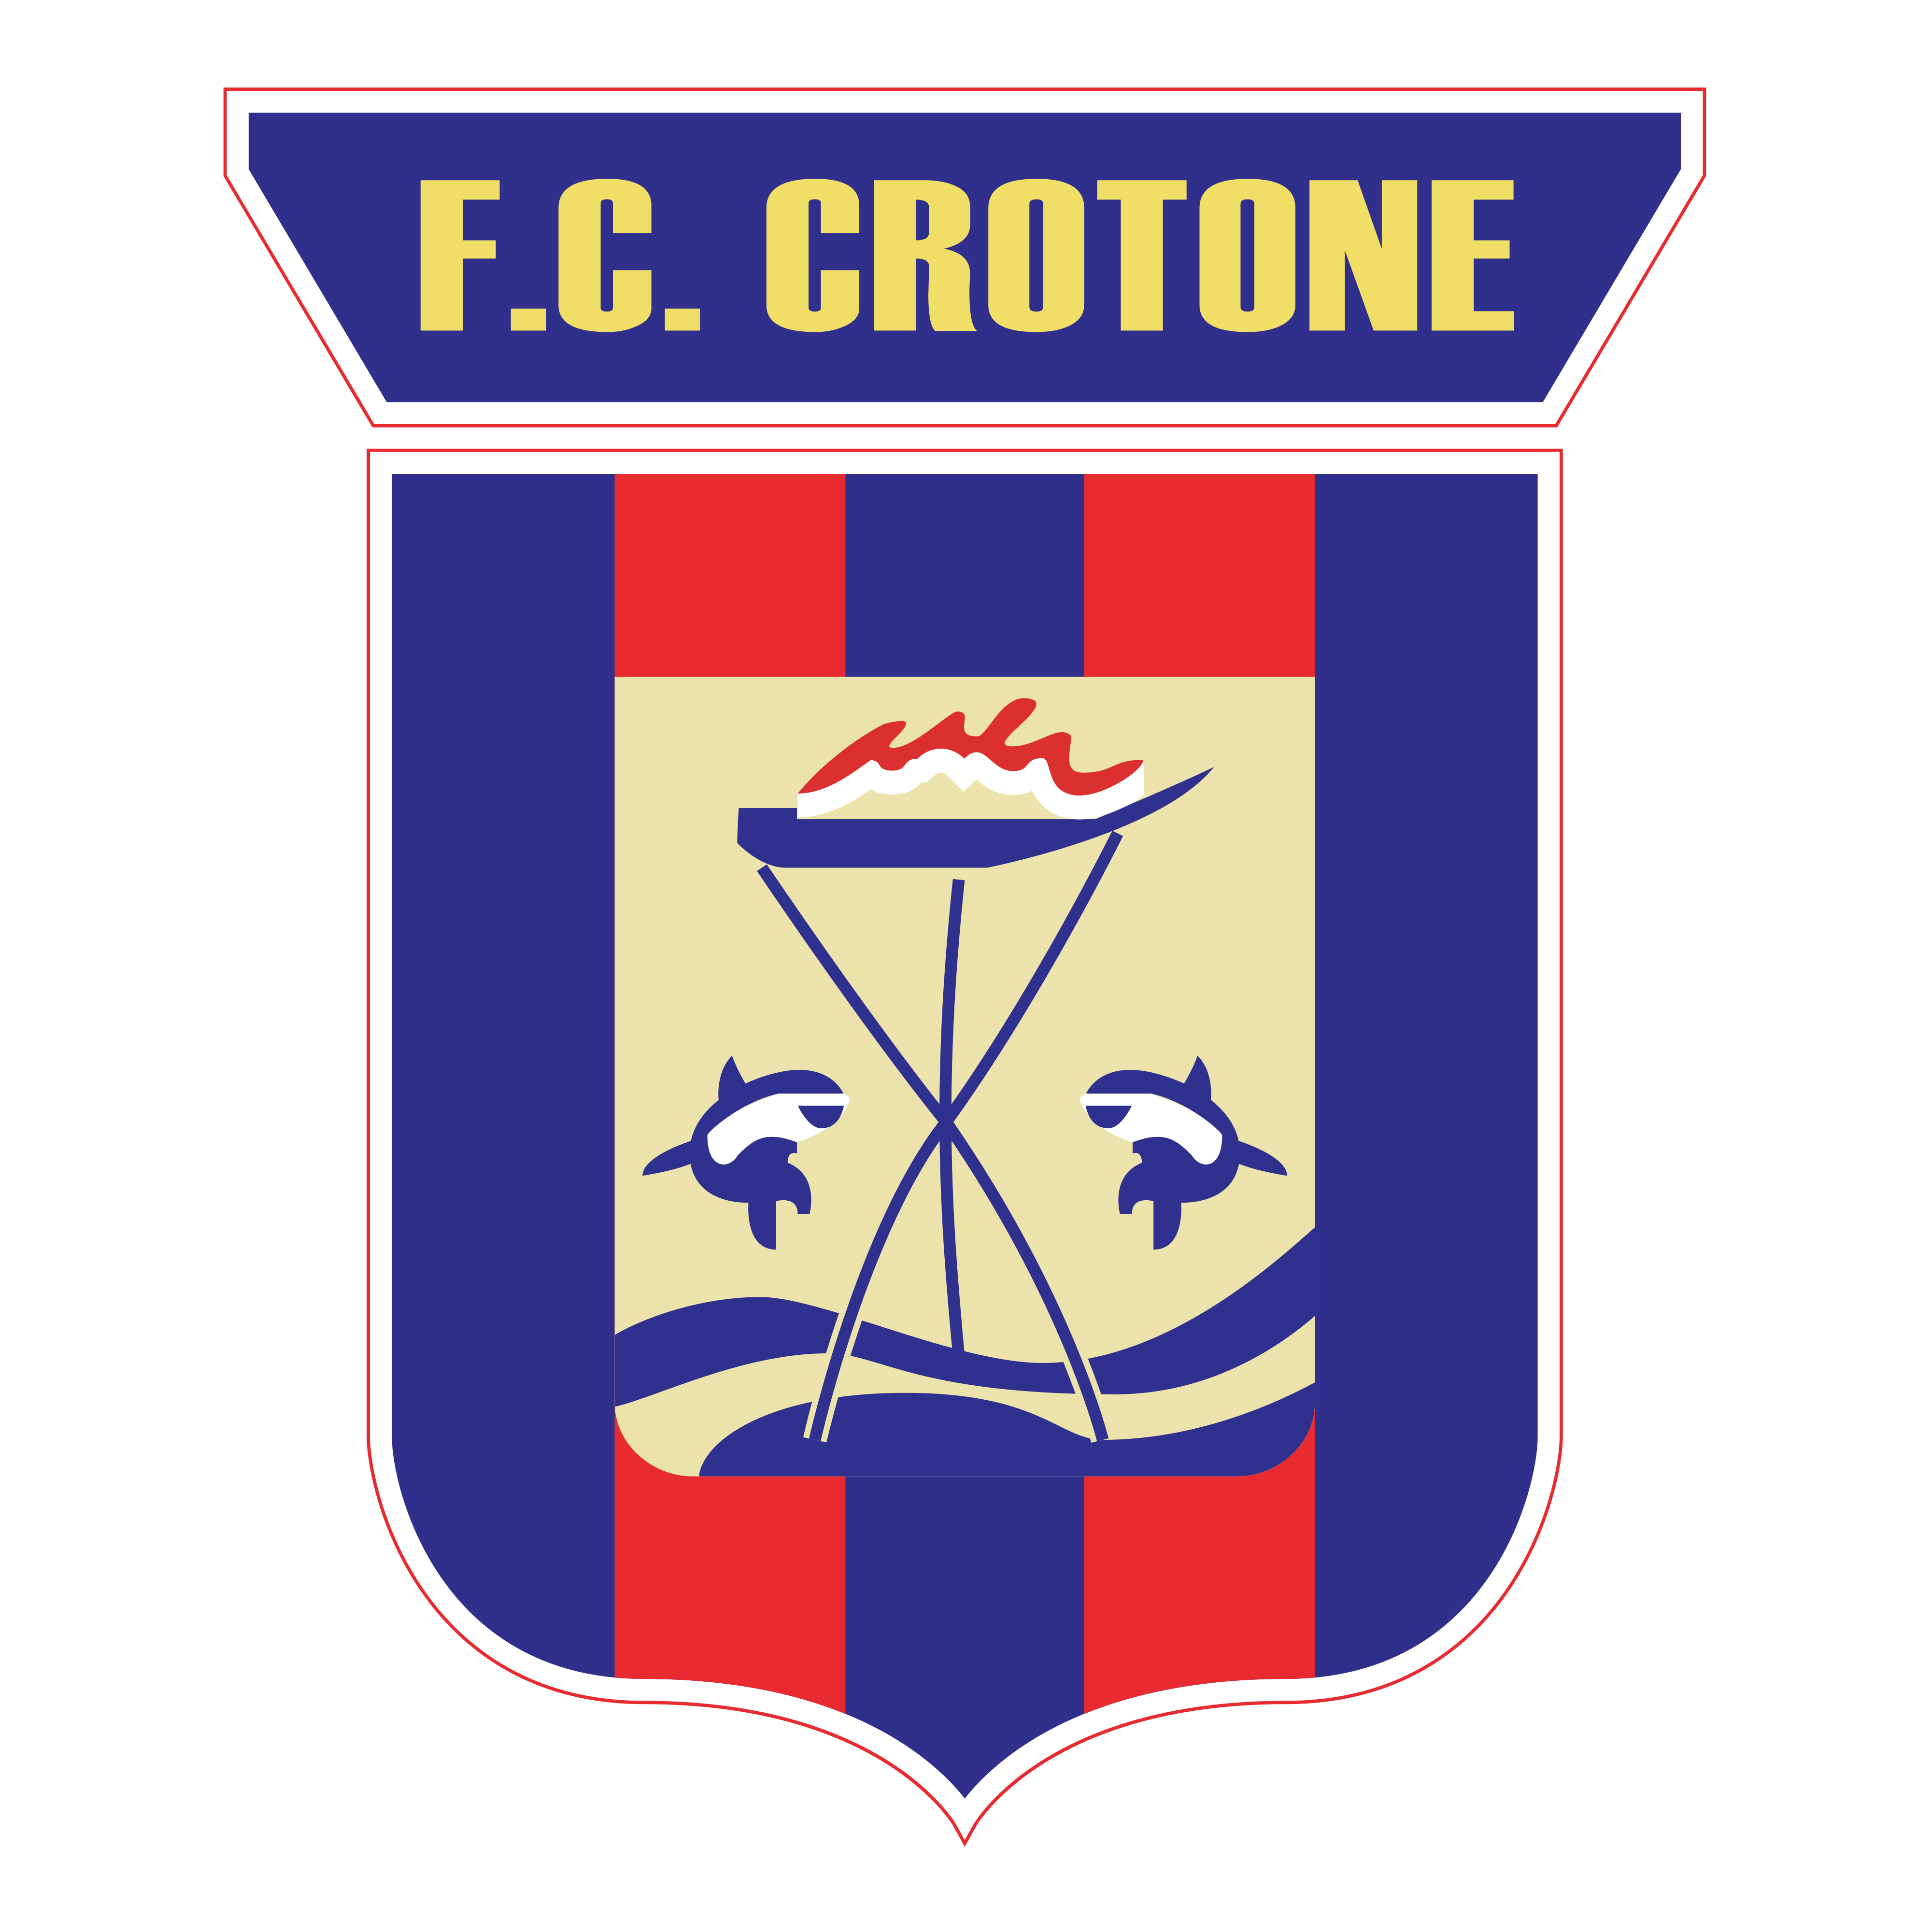 F.C. Crotone logo - download.